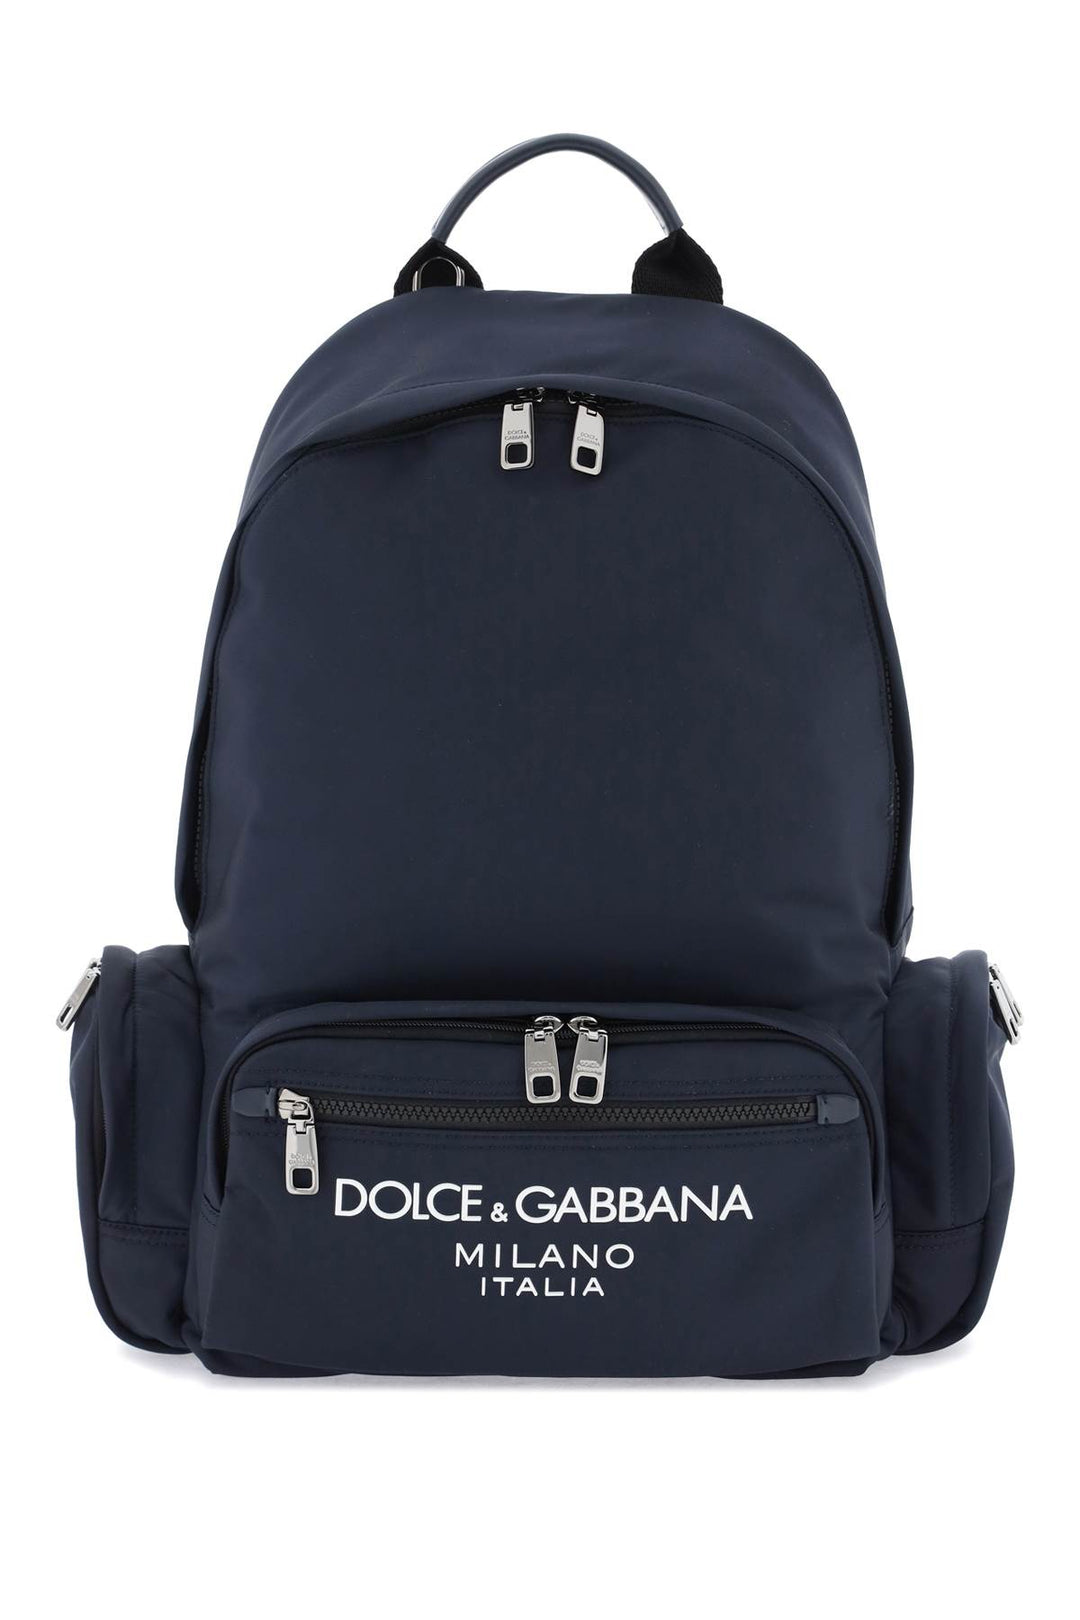 Dolce & gabbana nylon backpack with logo-0